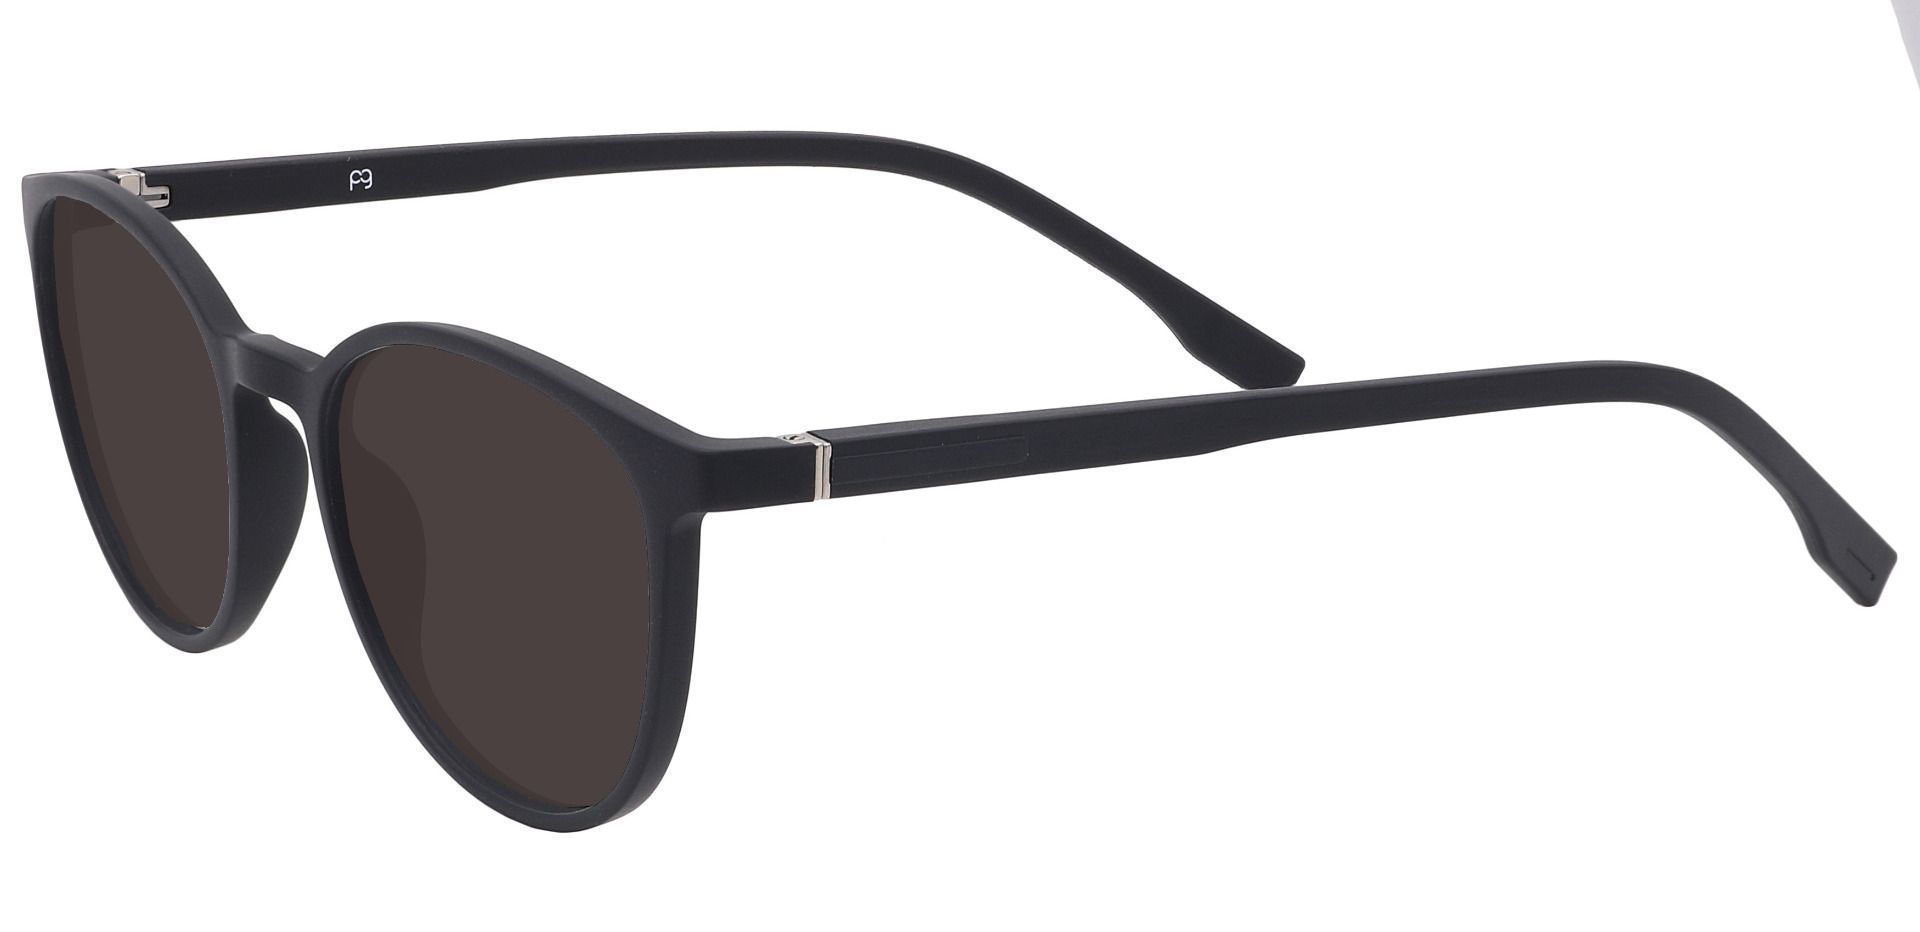 Bay Round Reading Sunglasses - Black Frame With Gray Lenses